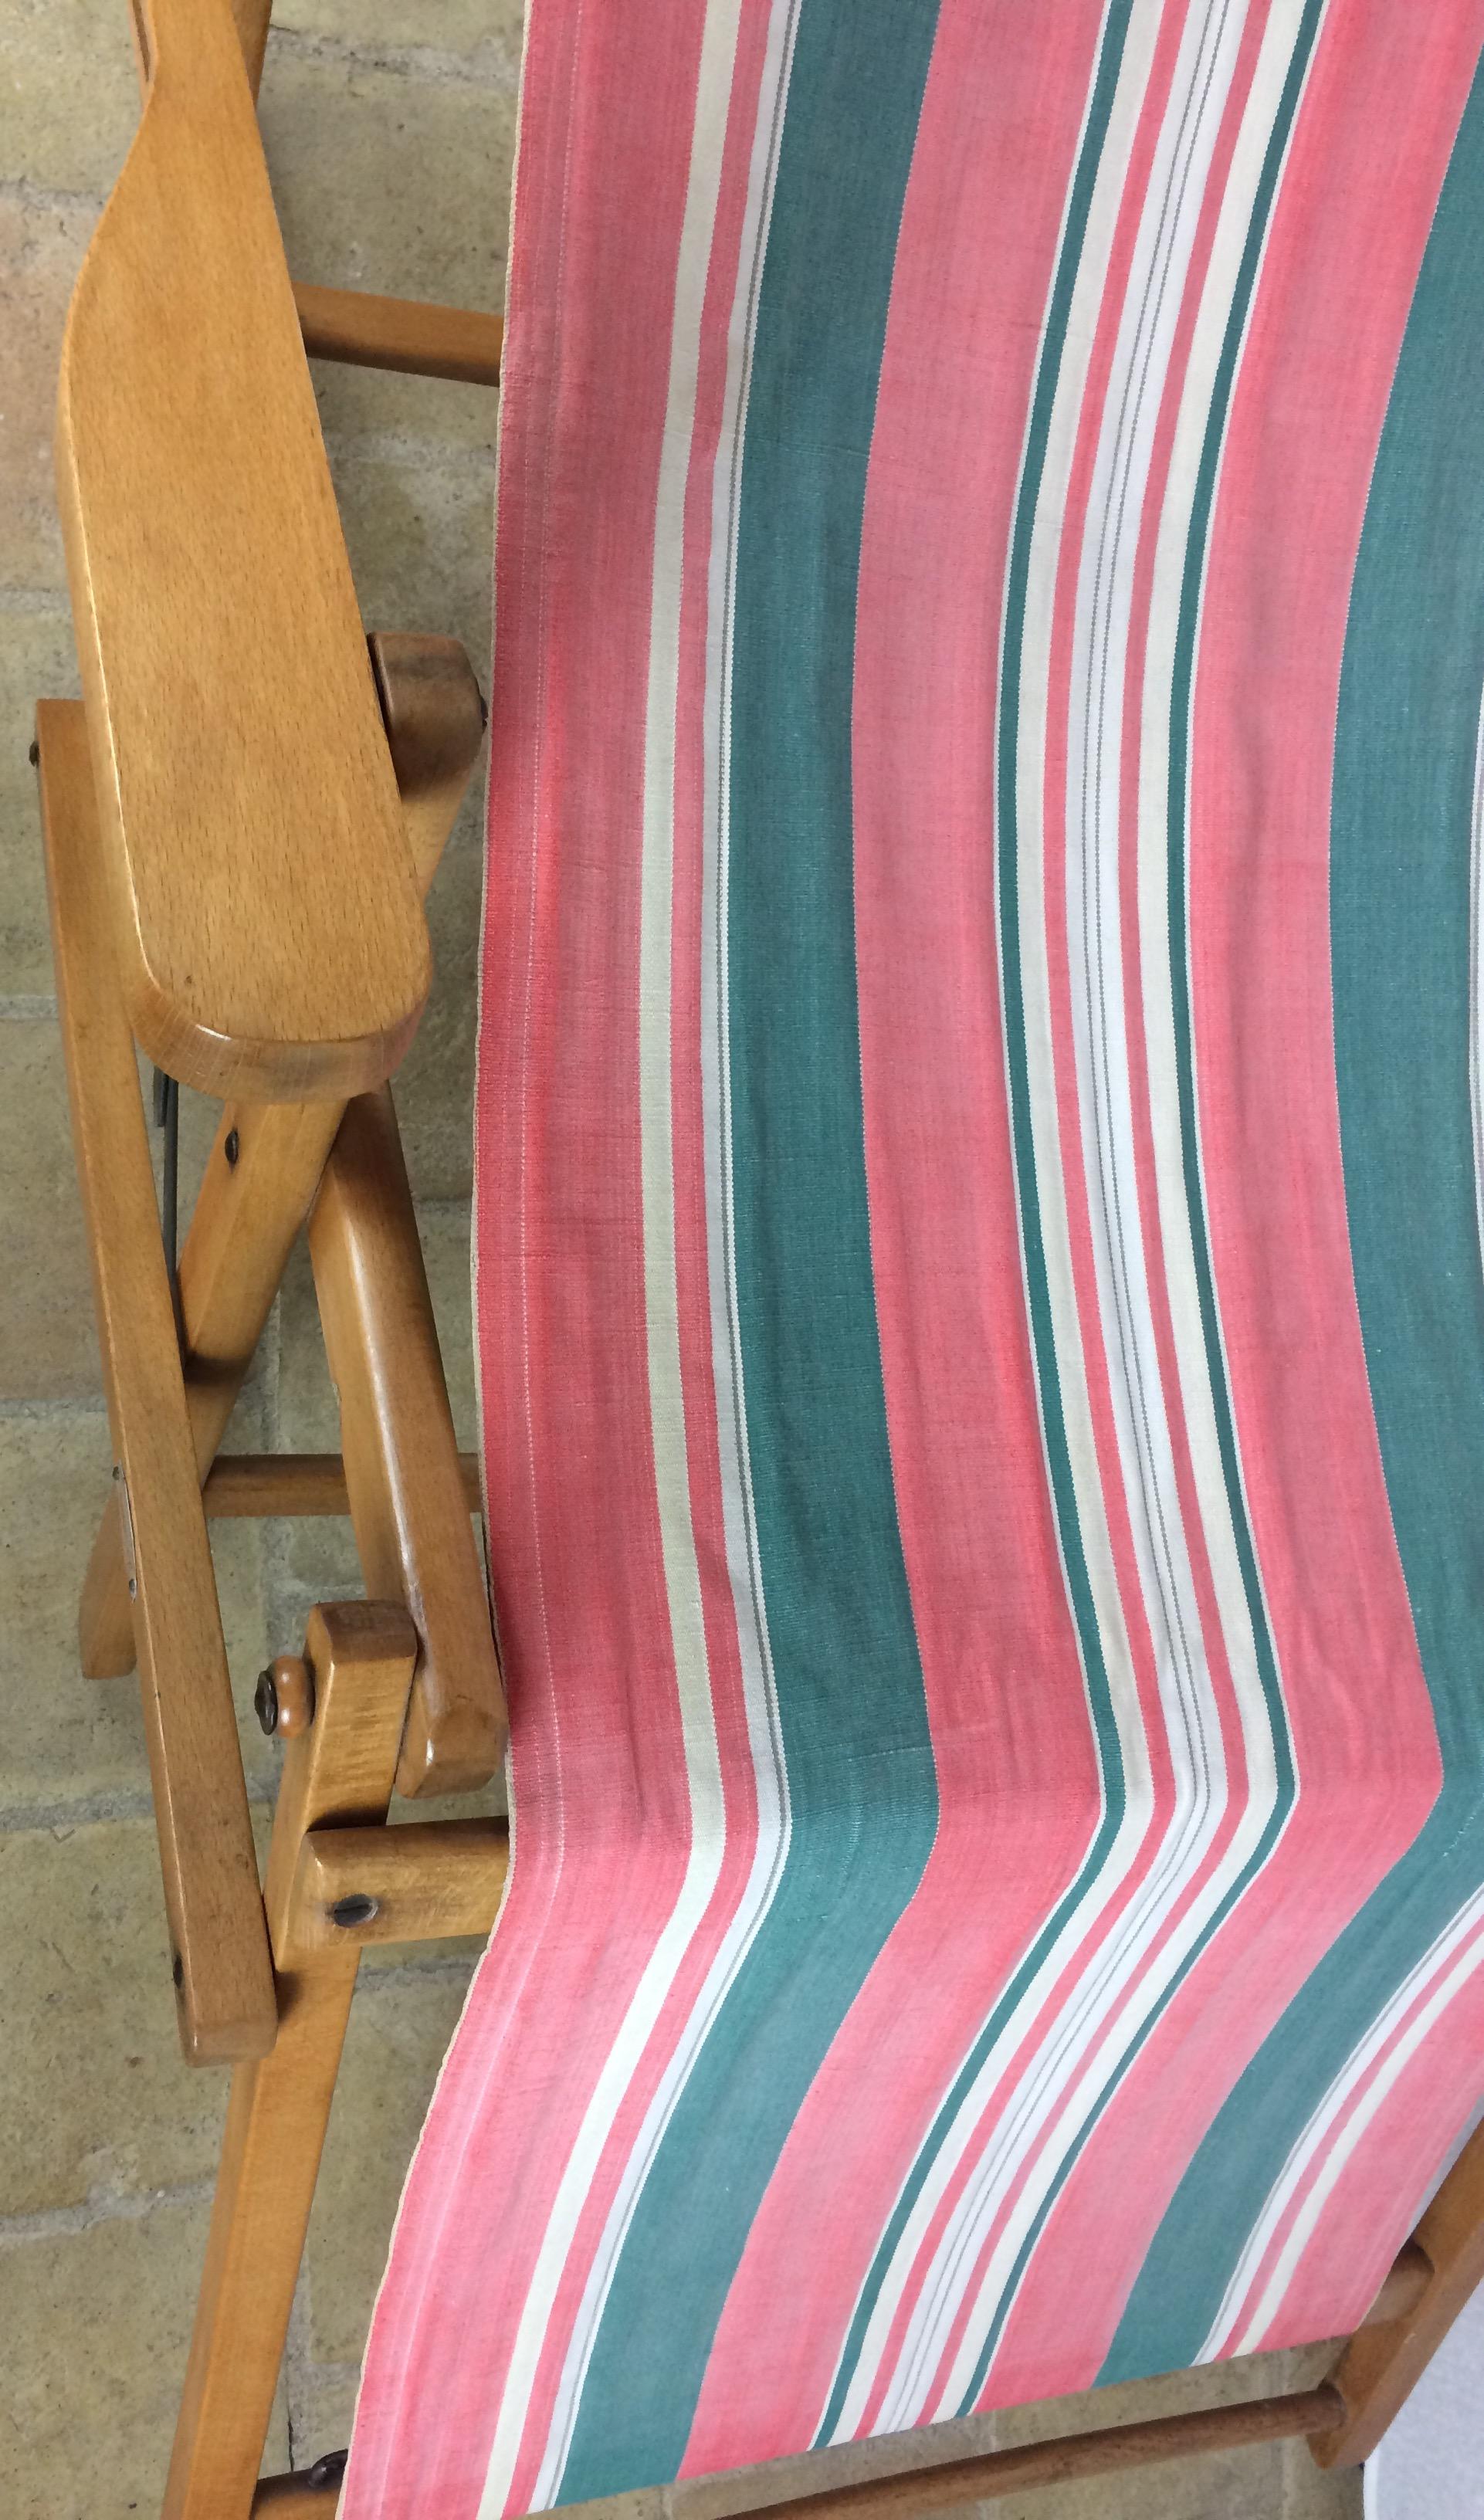 20th Century Original American Midcentury Ergelax Folding Canvas Lounge Chair, circa 1950s For Sale